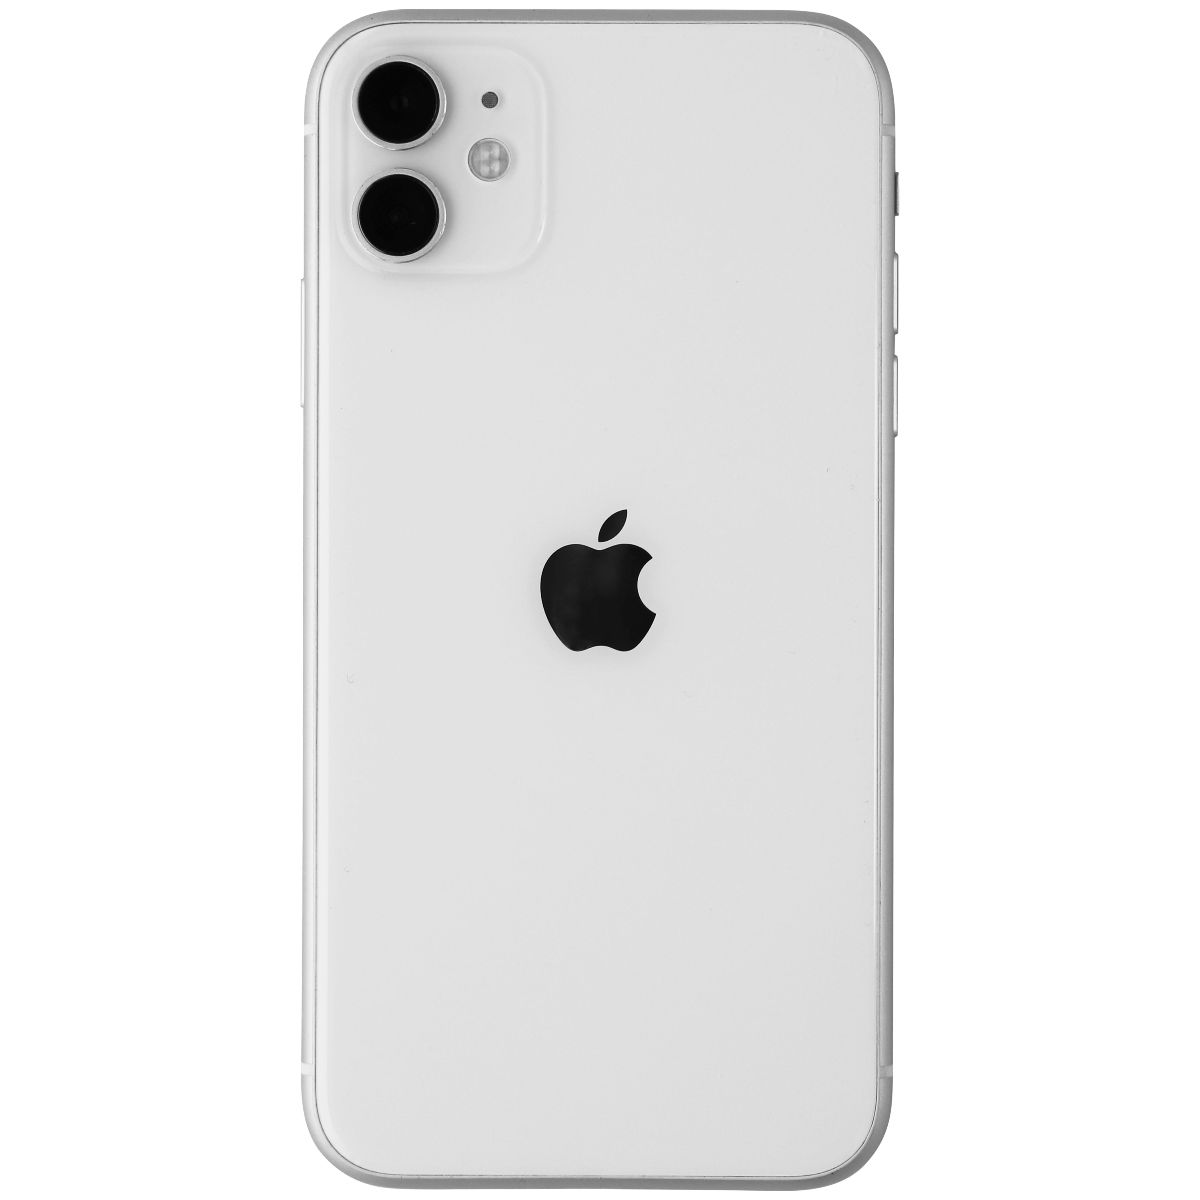 Apple iPhone 11 (6.1-inch) Smartphone (A2111) Verizon - 64GB / White Cell Phones & Smartphones Apple    - Simple Cell Bulk Wholesale Pricing - USA Seller